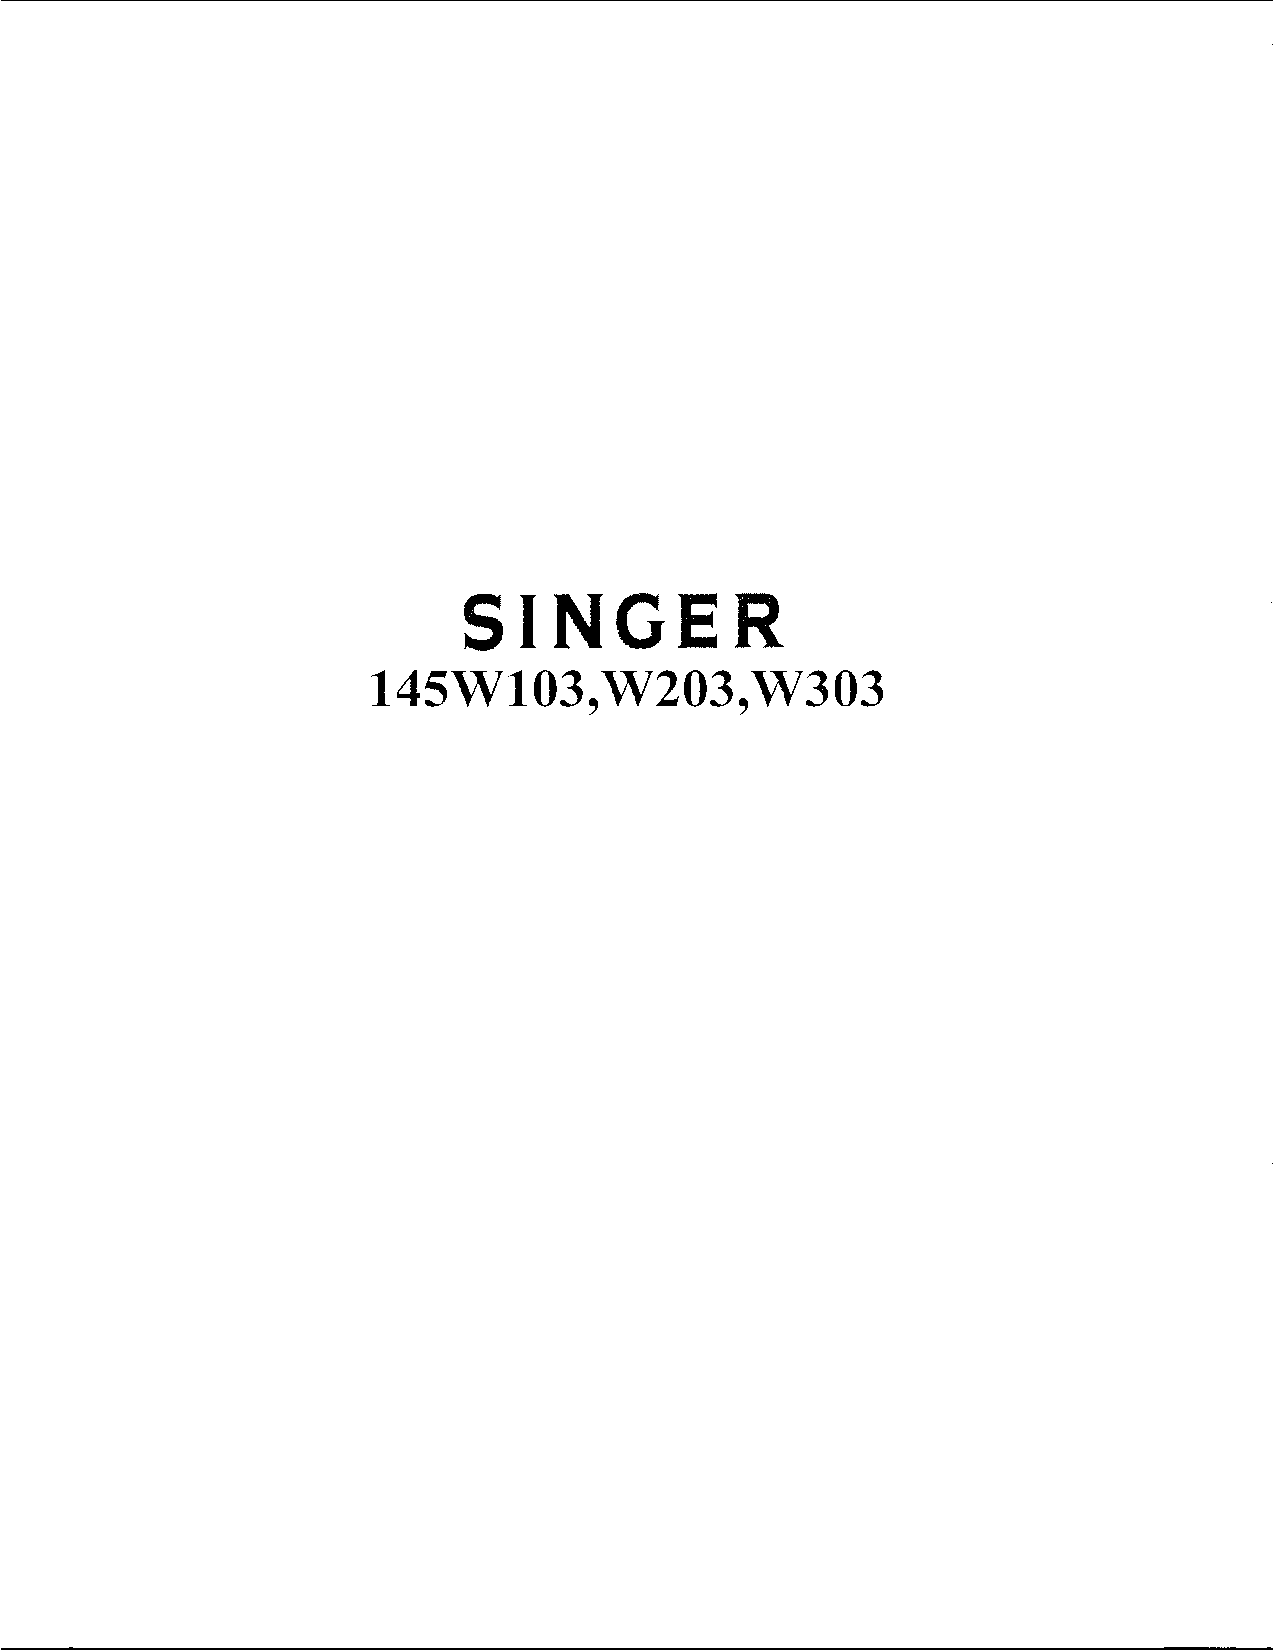 Singer W303, 145W103 User Manual